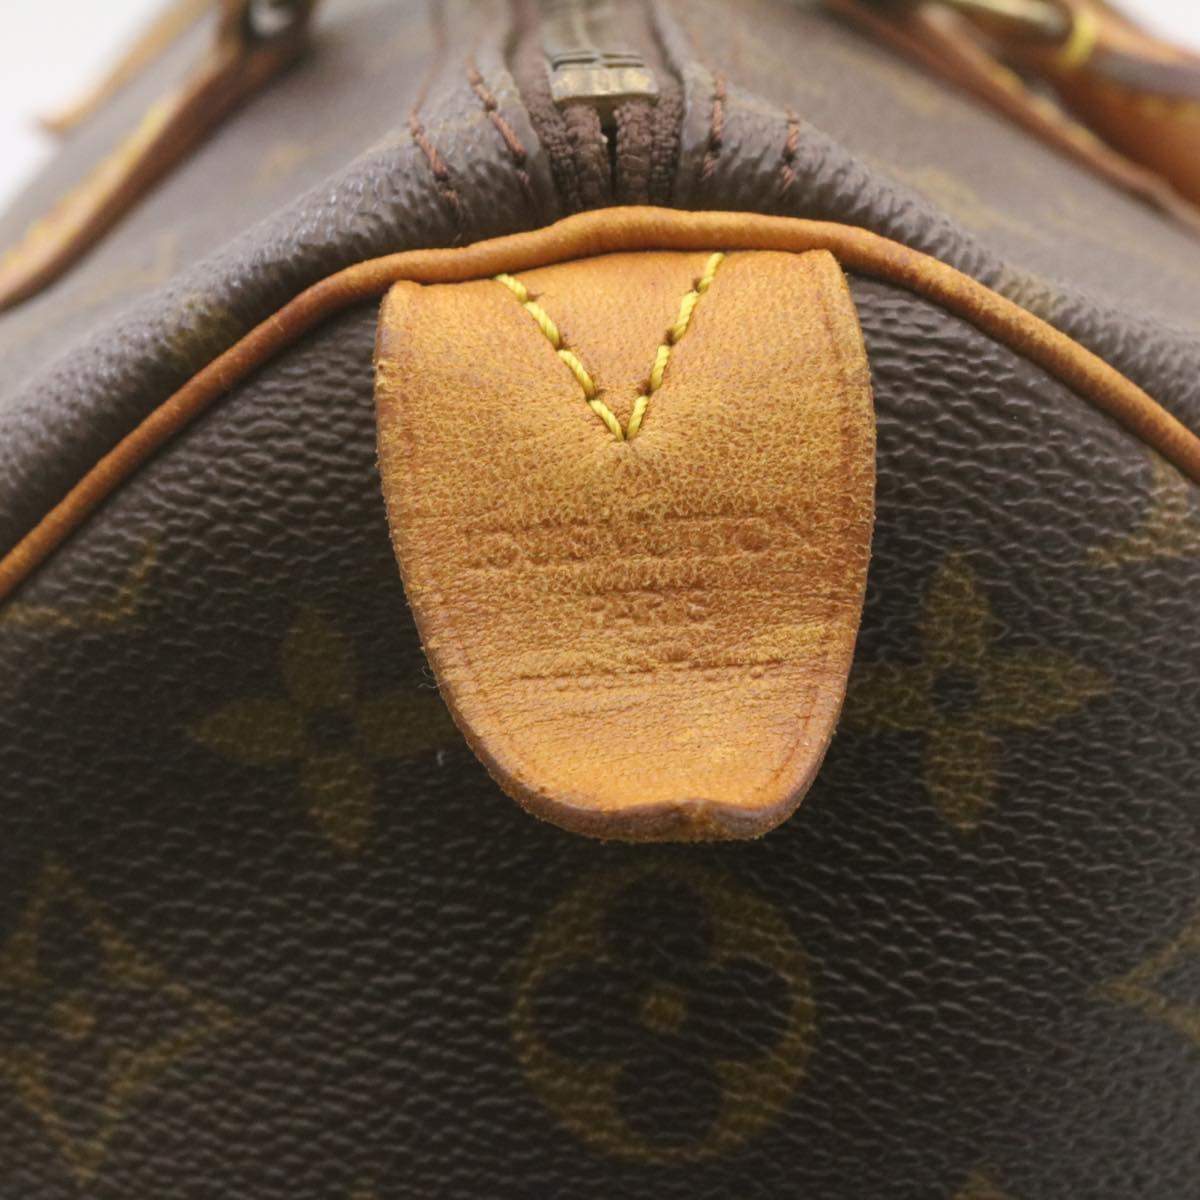 Louis Vuitton Monogram Speedy 35 Hand Bag M41524 LV Auth LT282 Louis Vuitton